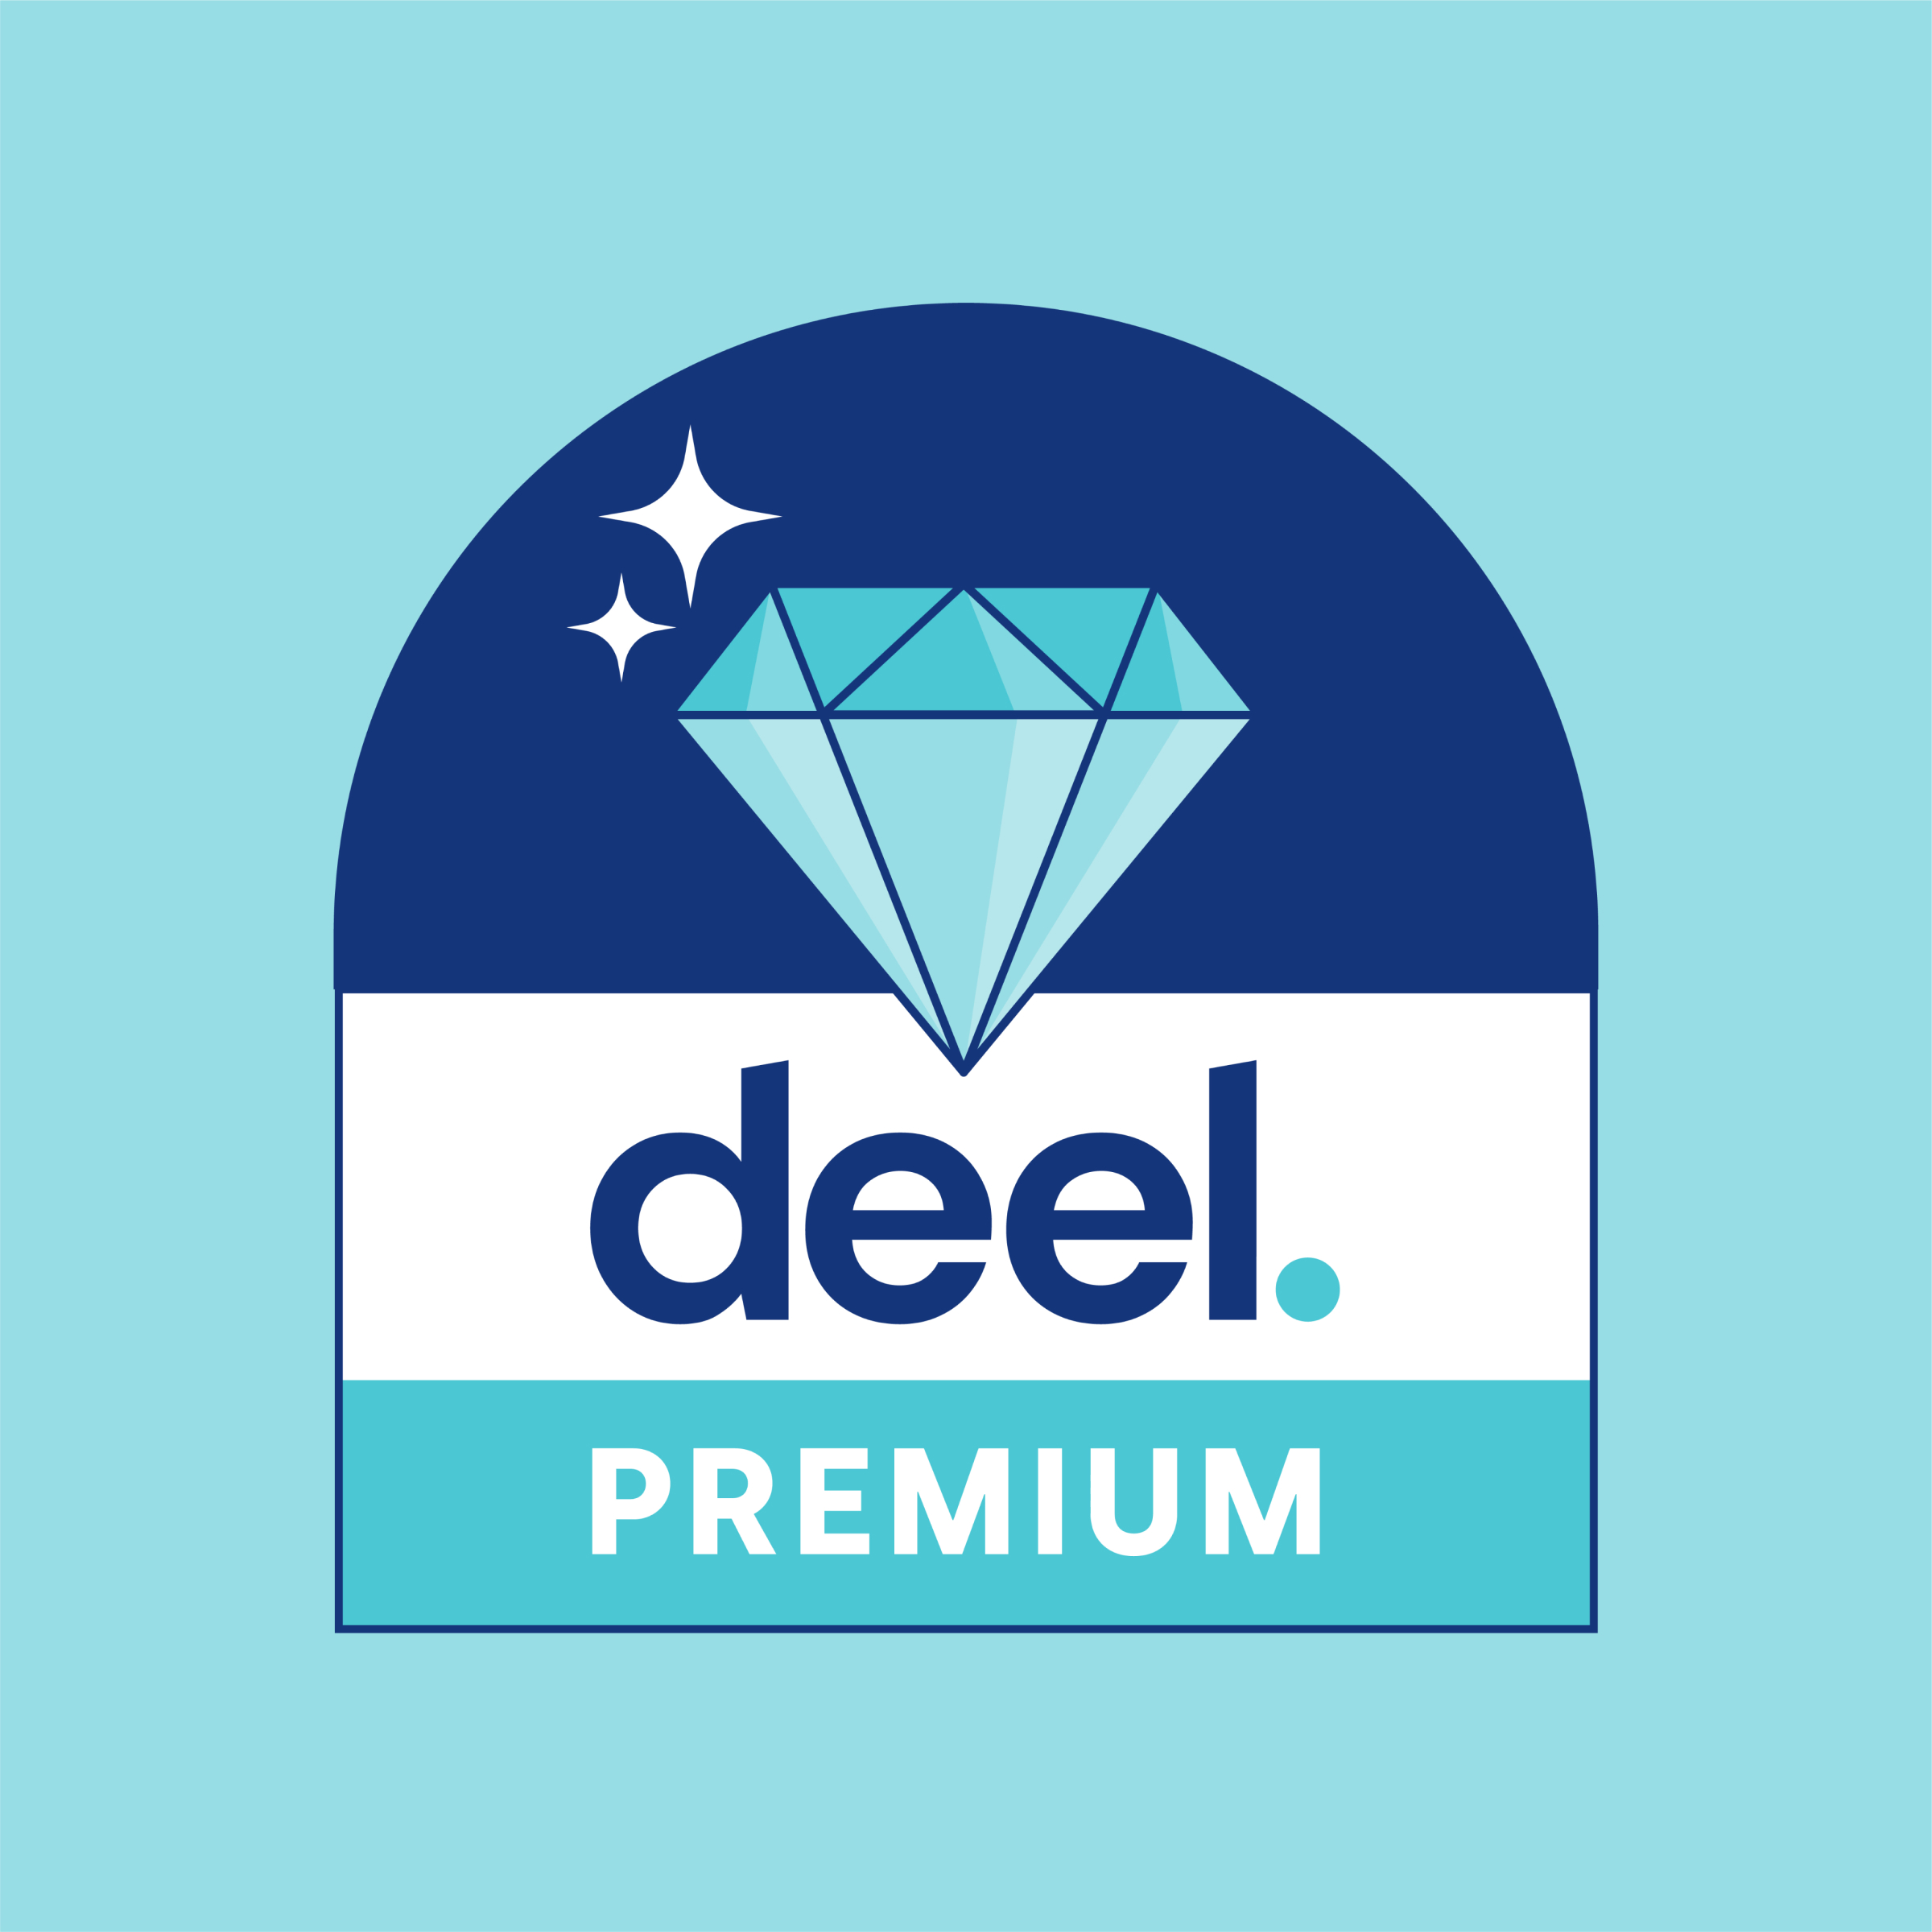 Introducing Deel Premium